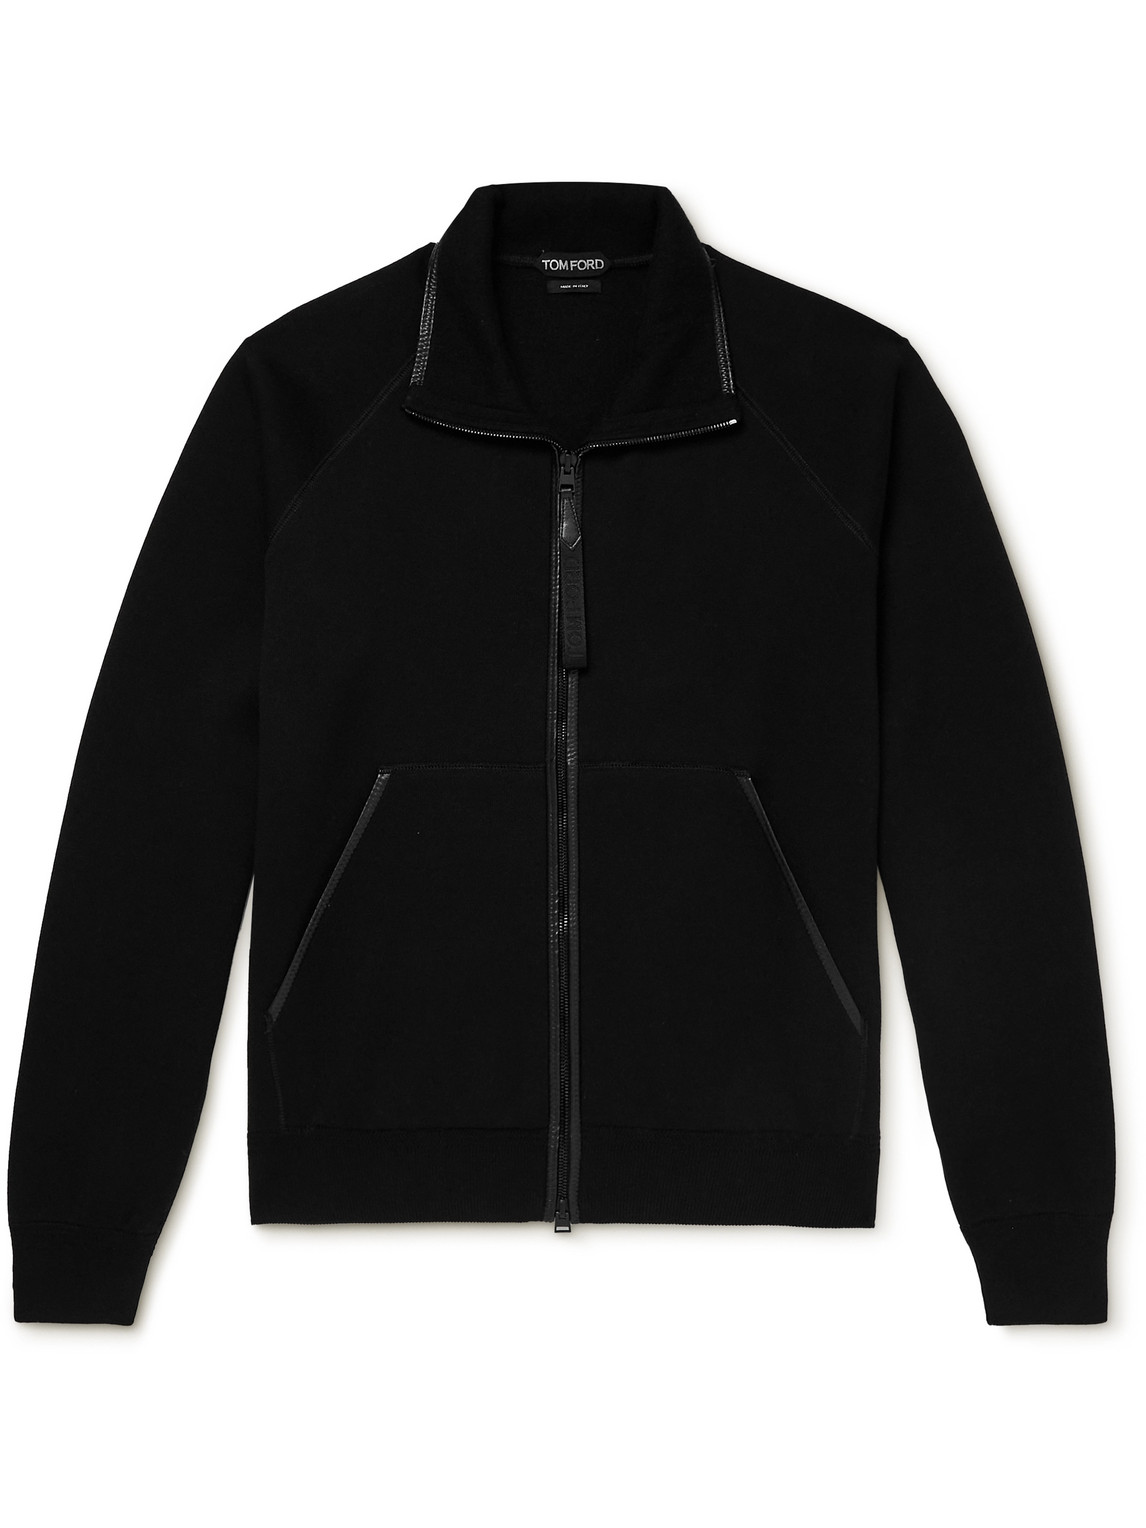 Leather-Trimmed Cotton-Blend Zip-Up Sweatshirt